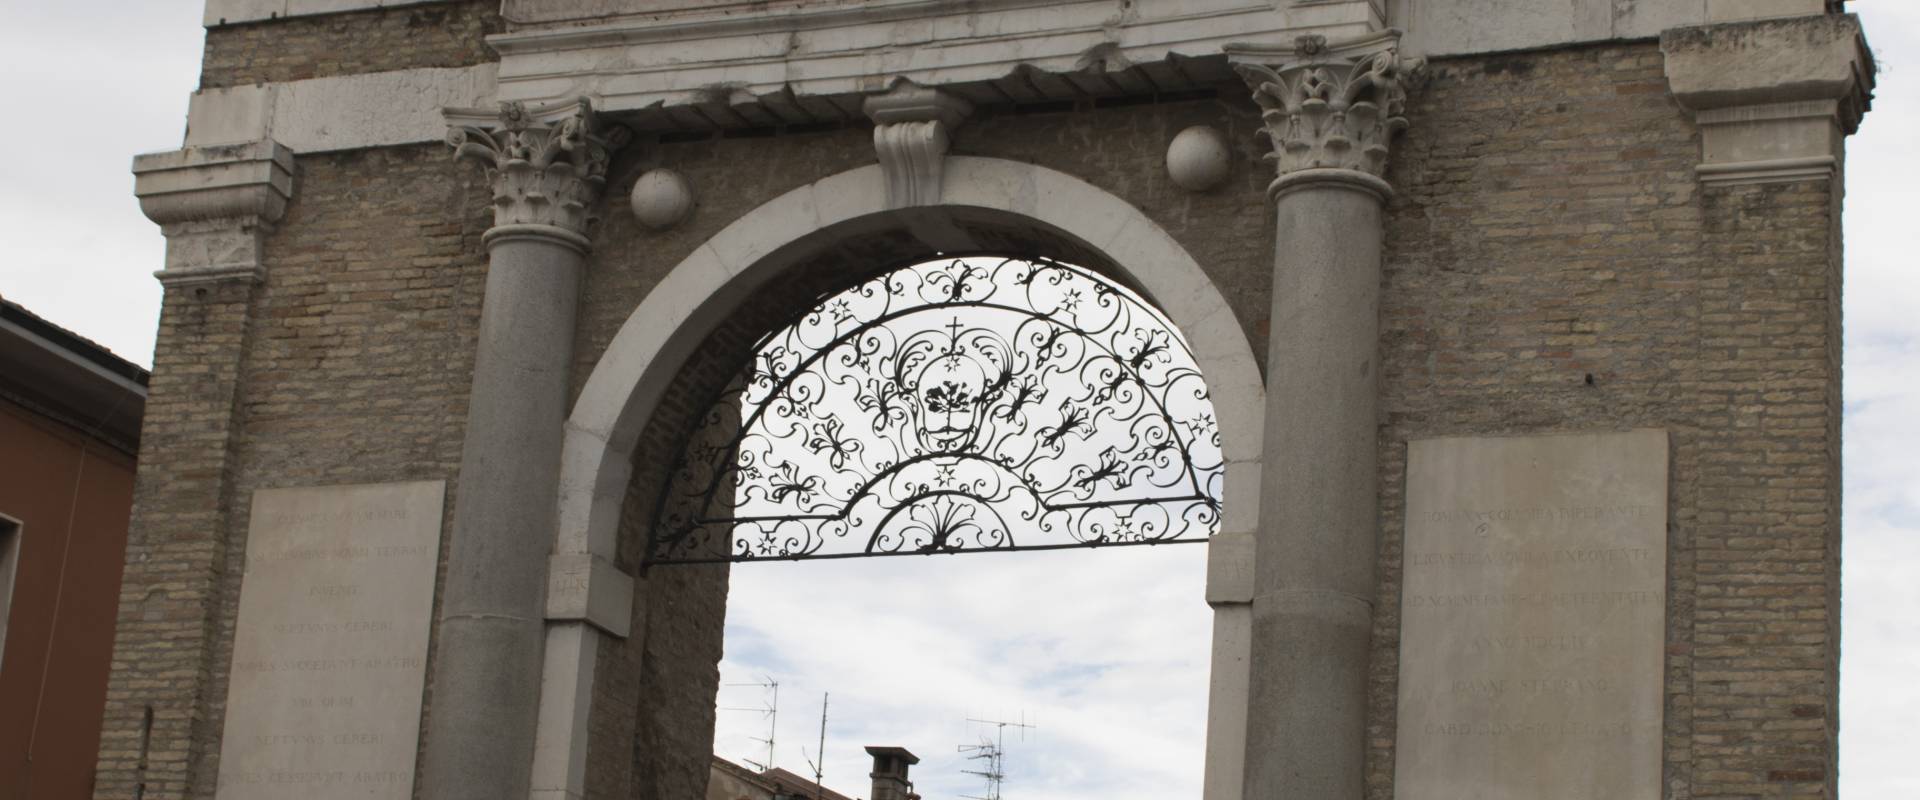 Ravenna Porta nuova photo by 0mente0